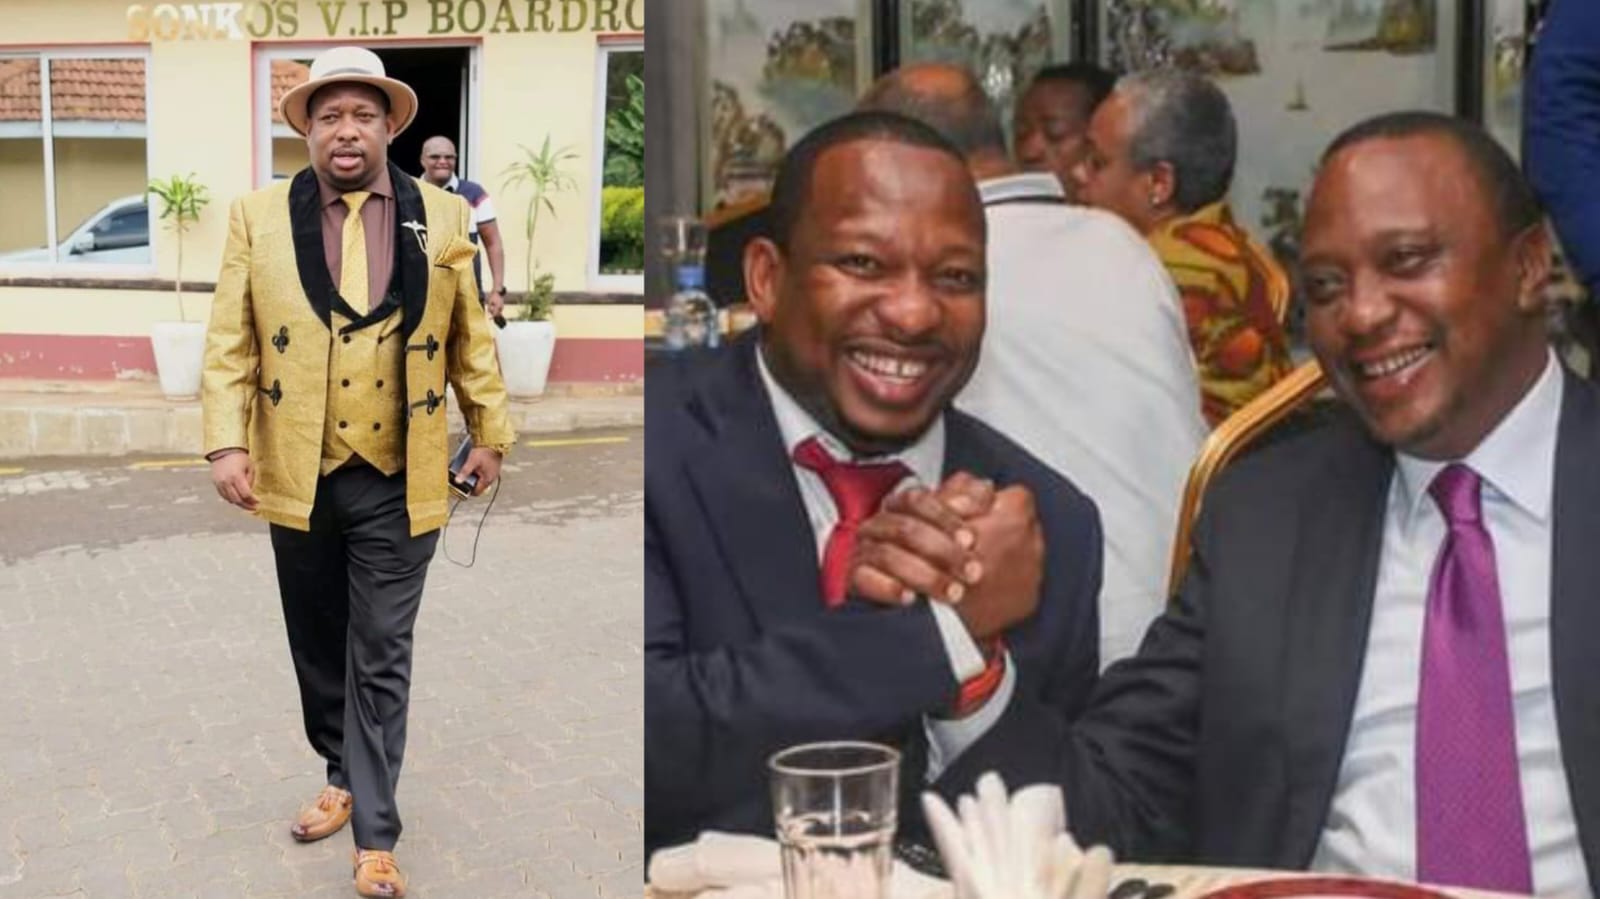 Mike Sonko and the former president Uhuru Kenyatta